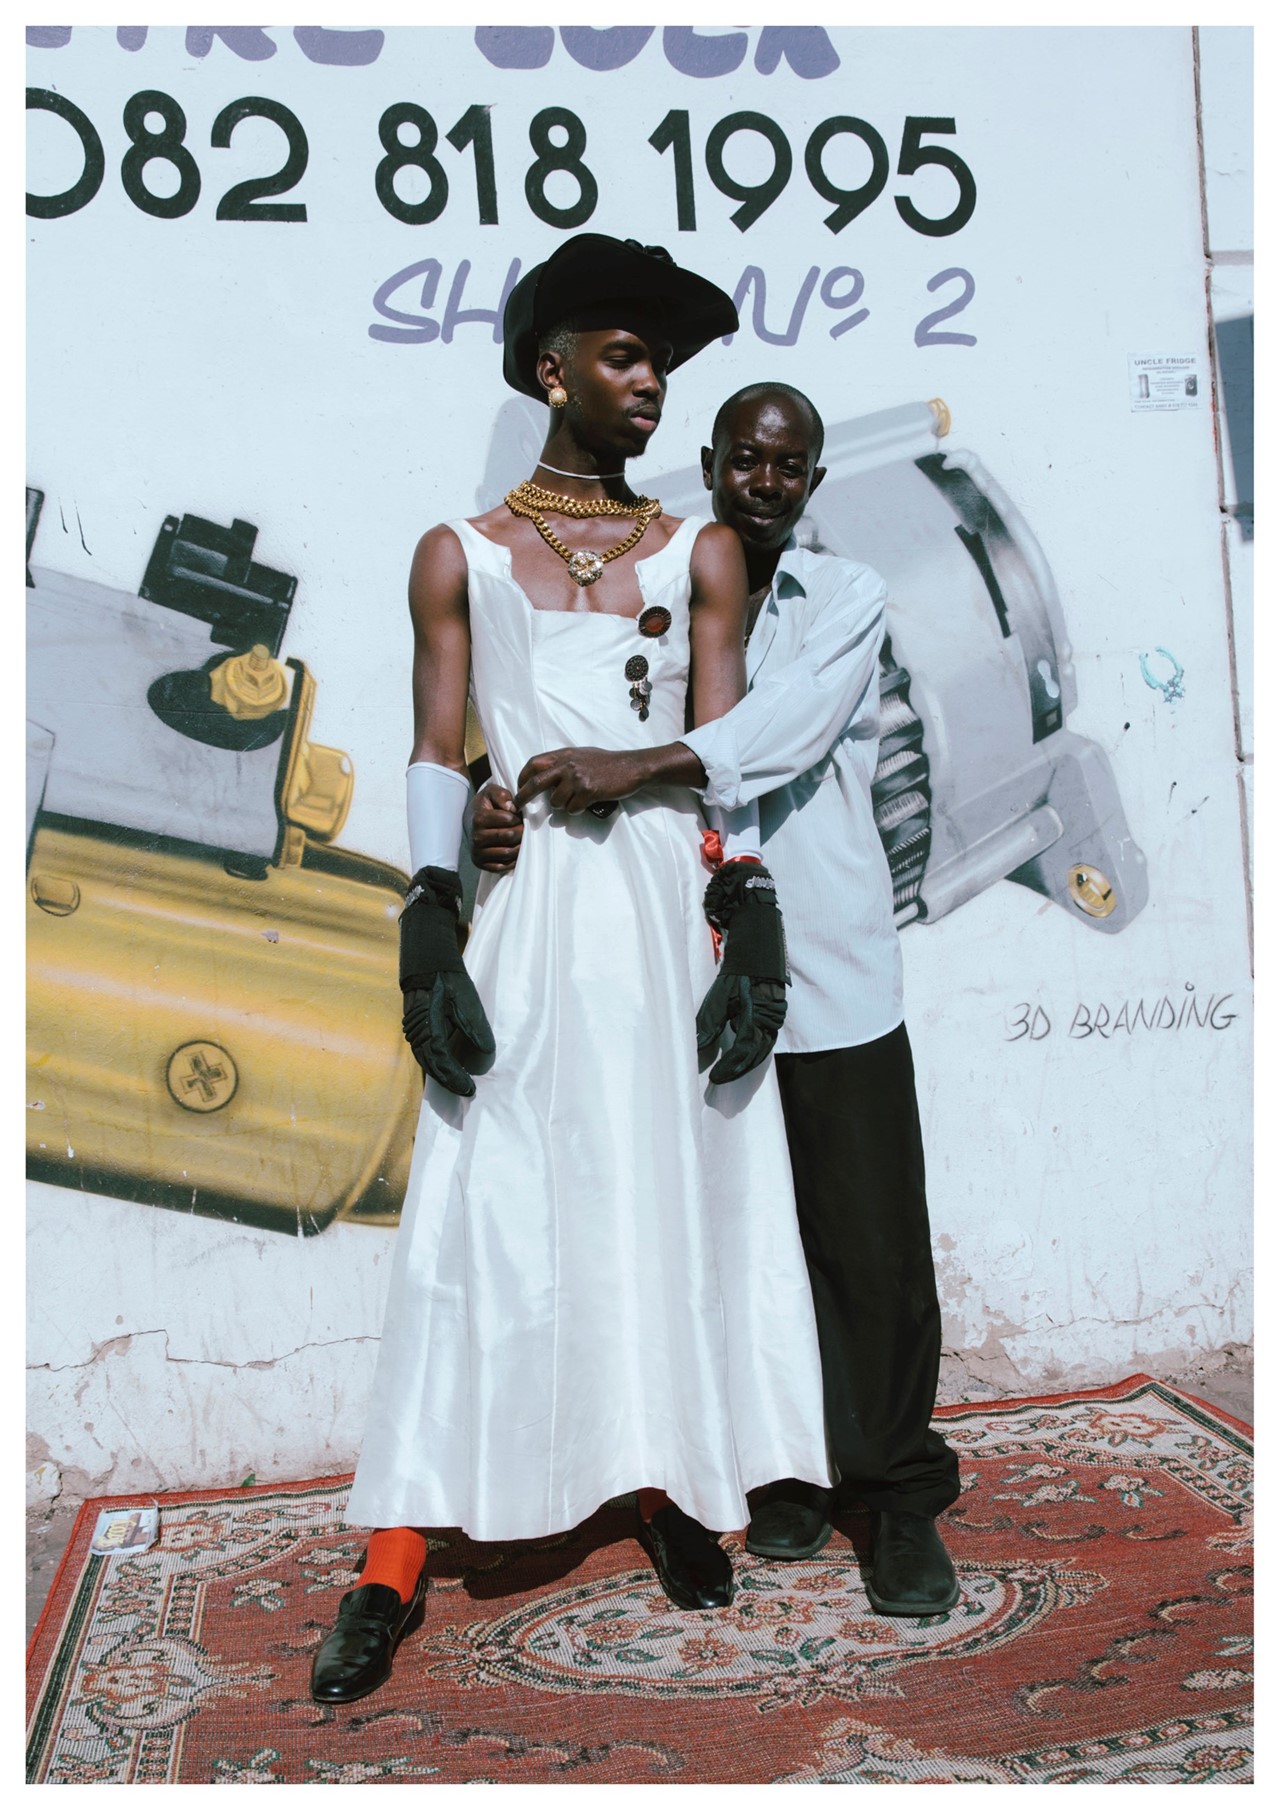 Mishy✧ — Ib Kamara photographed by Kristin-Lee Moolman.